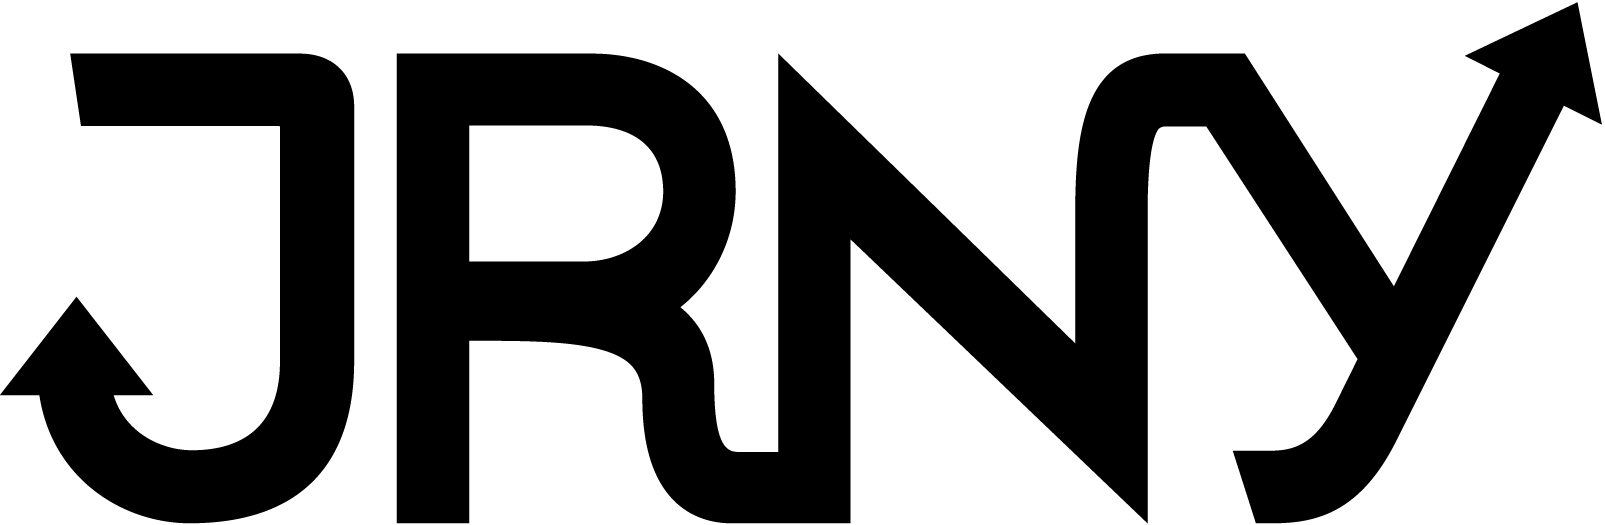 JRNY logo black with transparent background